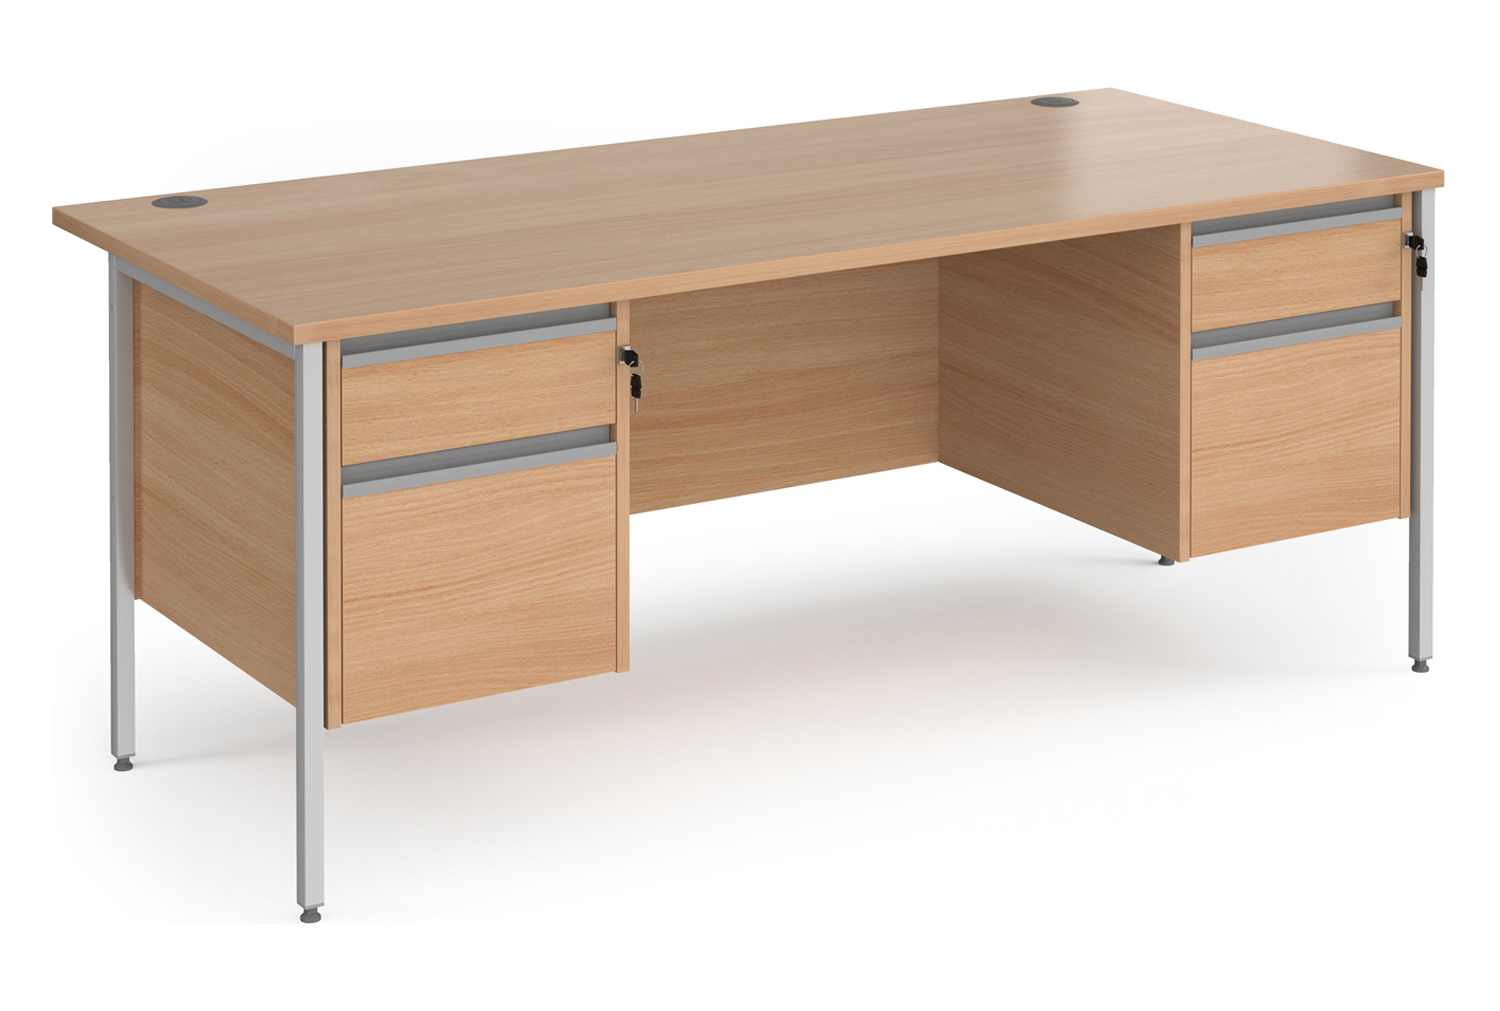 Value Line Classic+ Rectangular H-Leg Office Desk 2+2 Drawers (Silver Leg), 180wx80dx73h (cm), Beech, Express Delivery